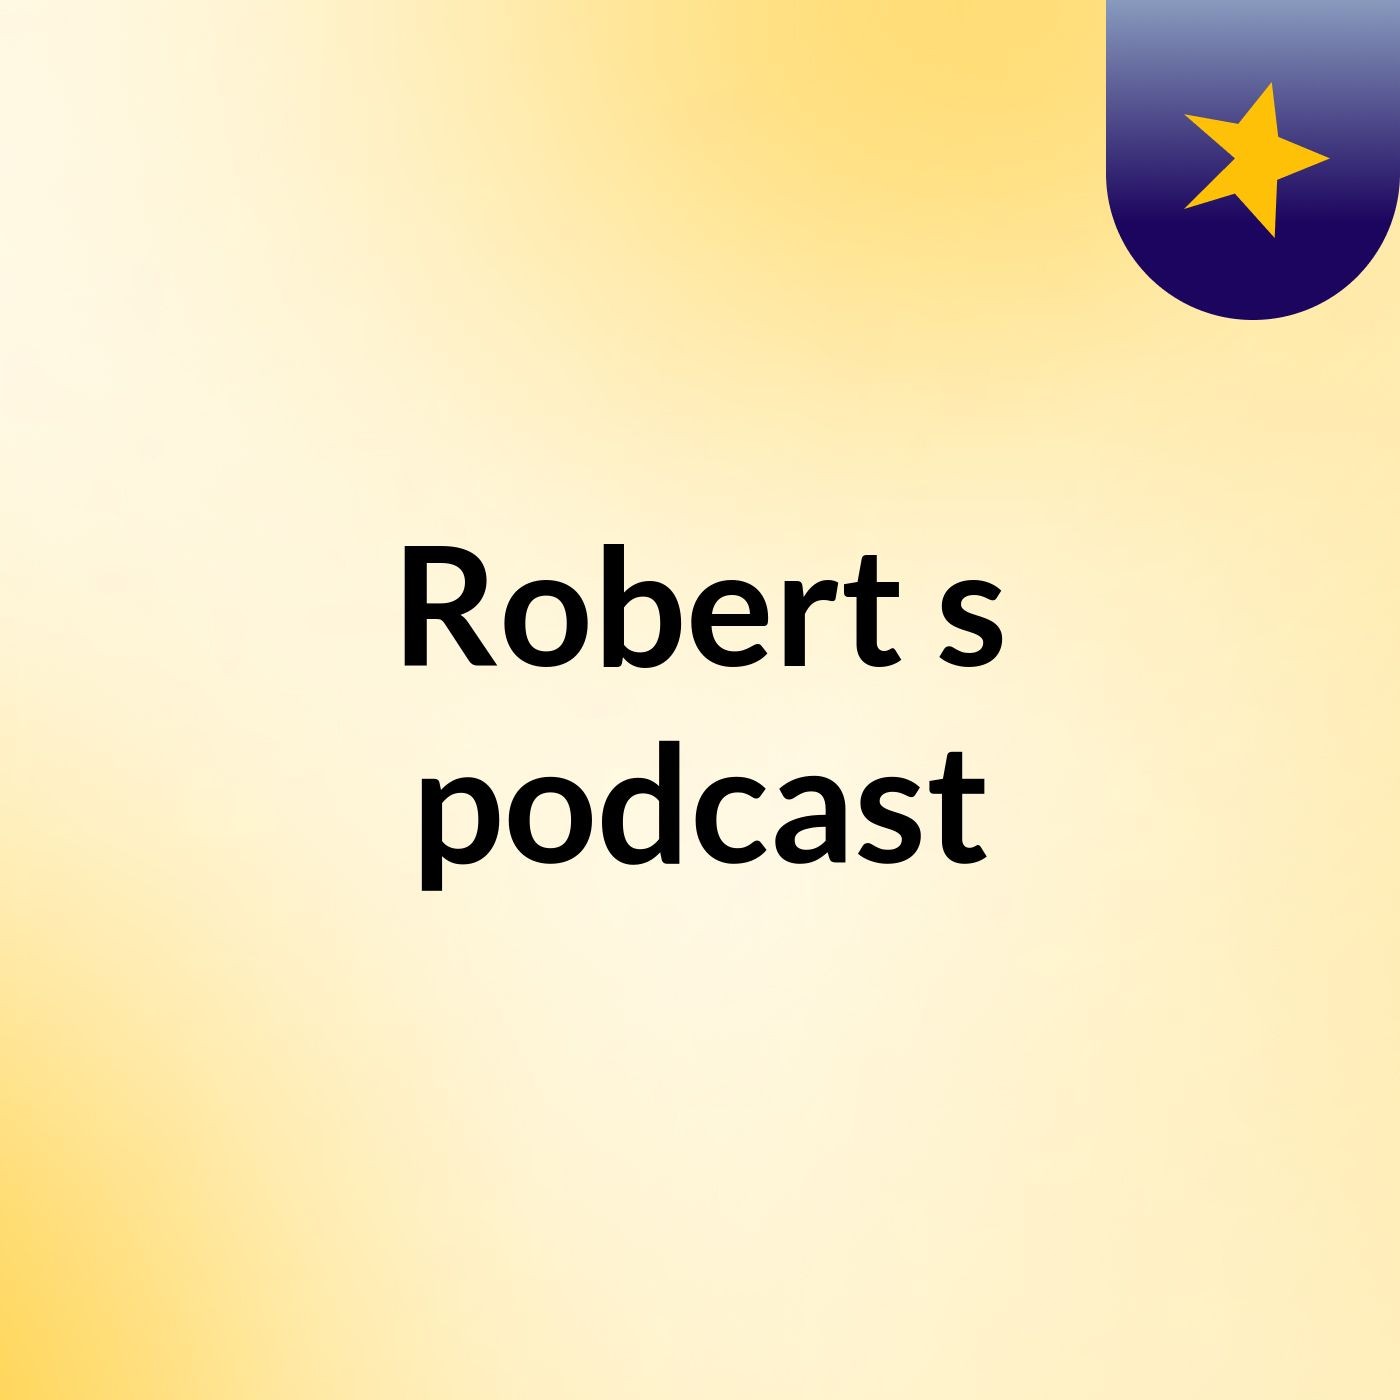 Robert's podcast